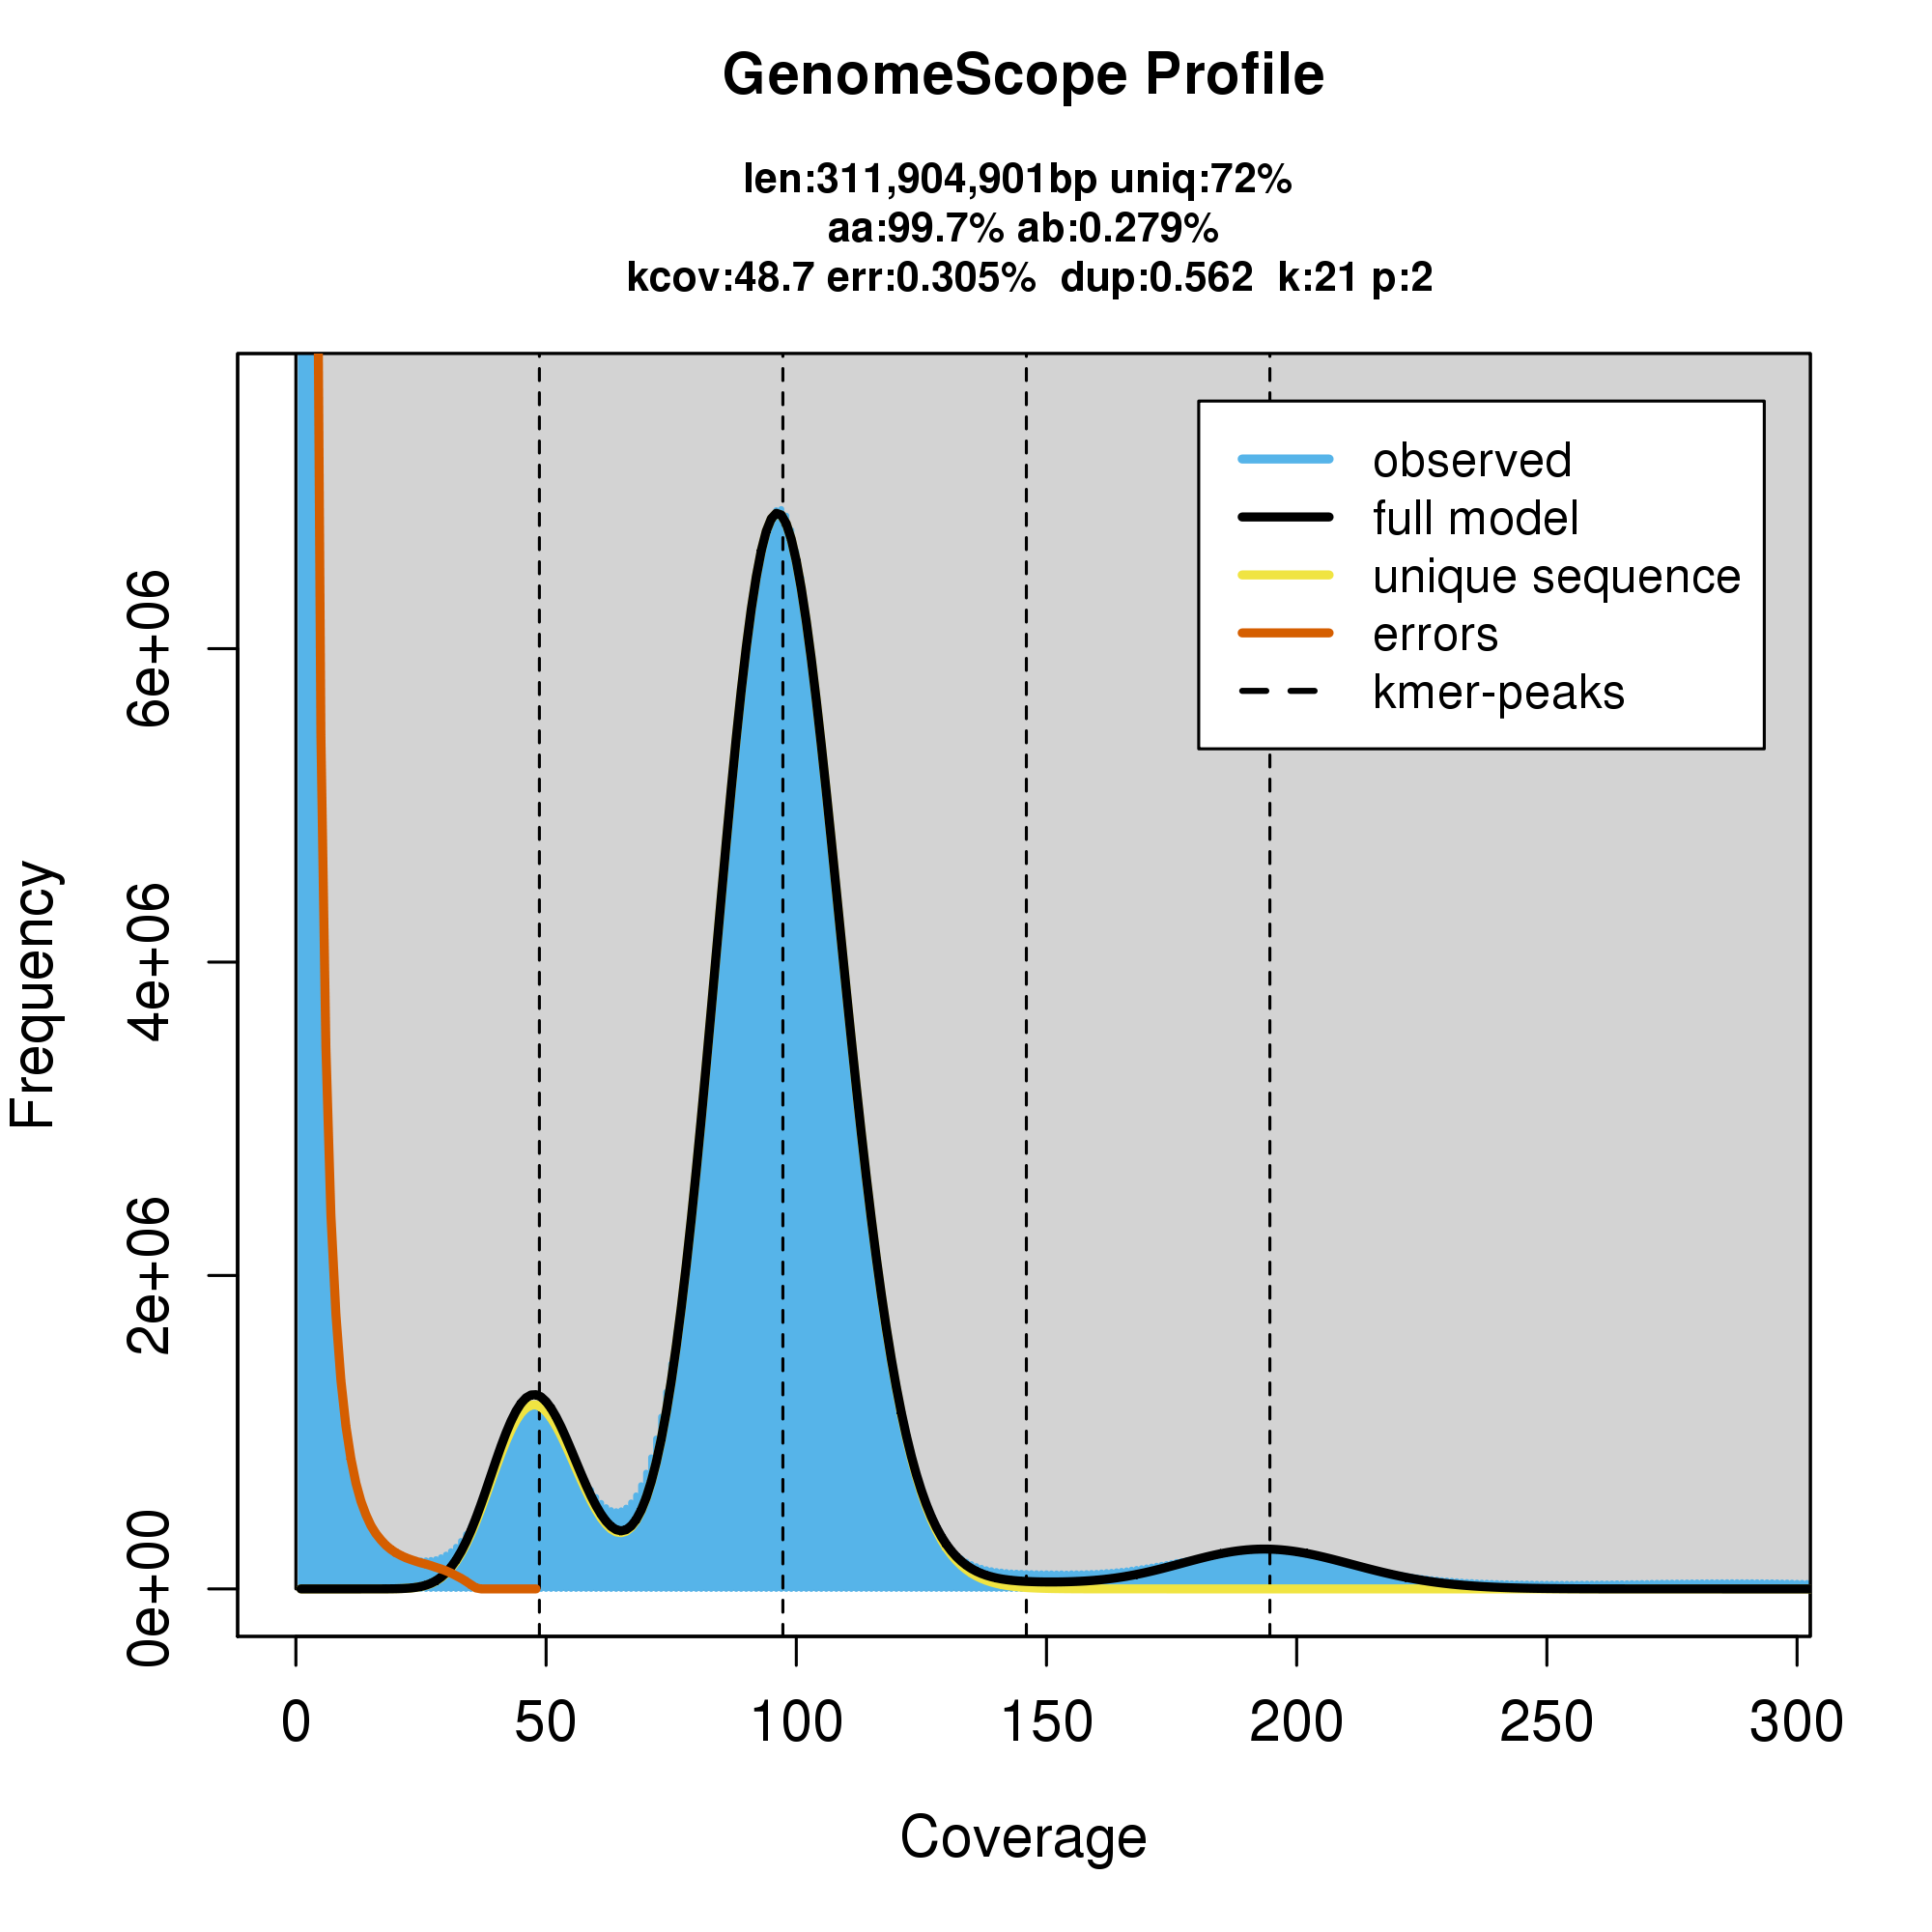 omics_genome.survey_GenomeScope2.0.png?raw=true